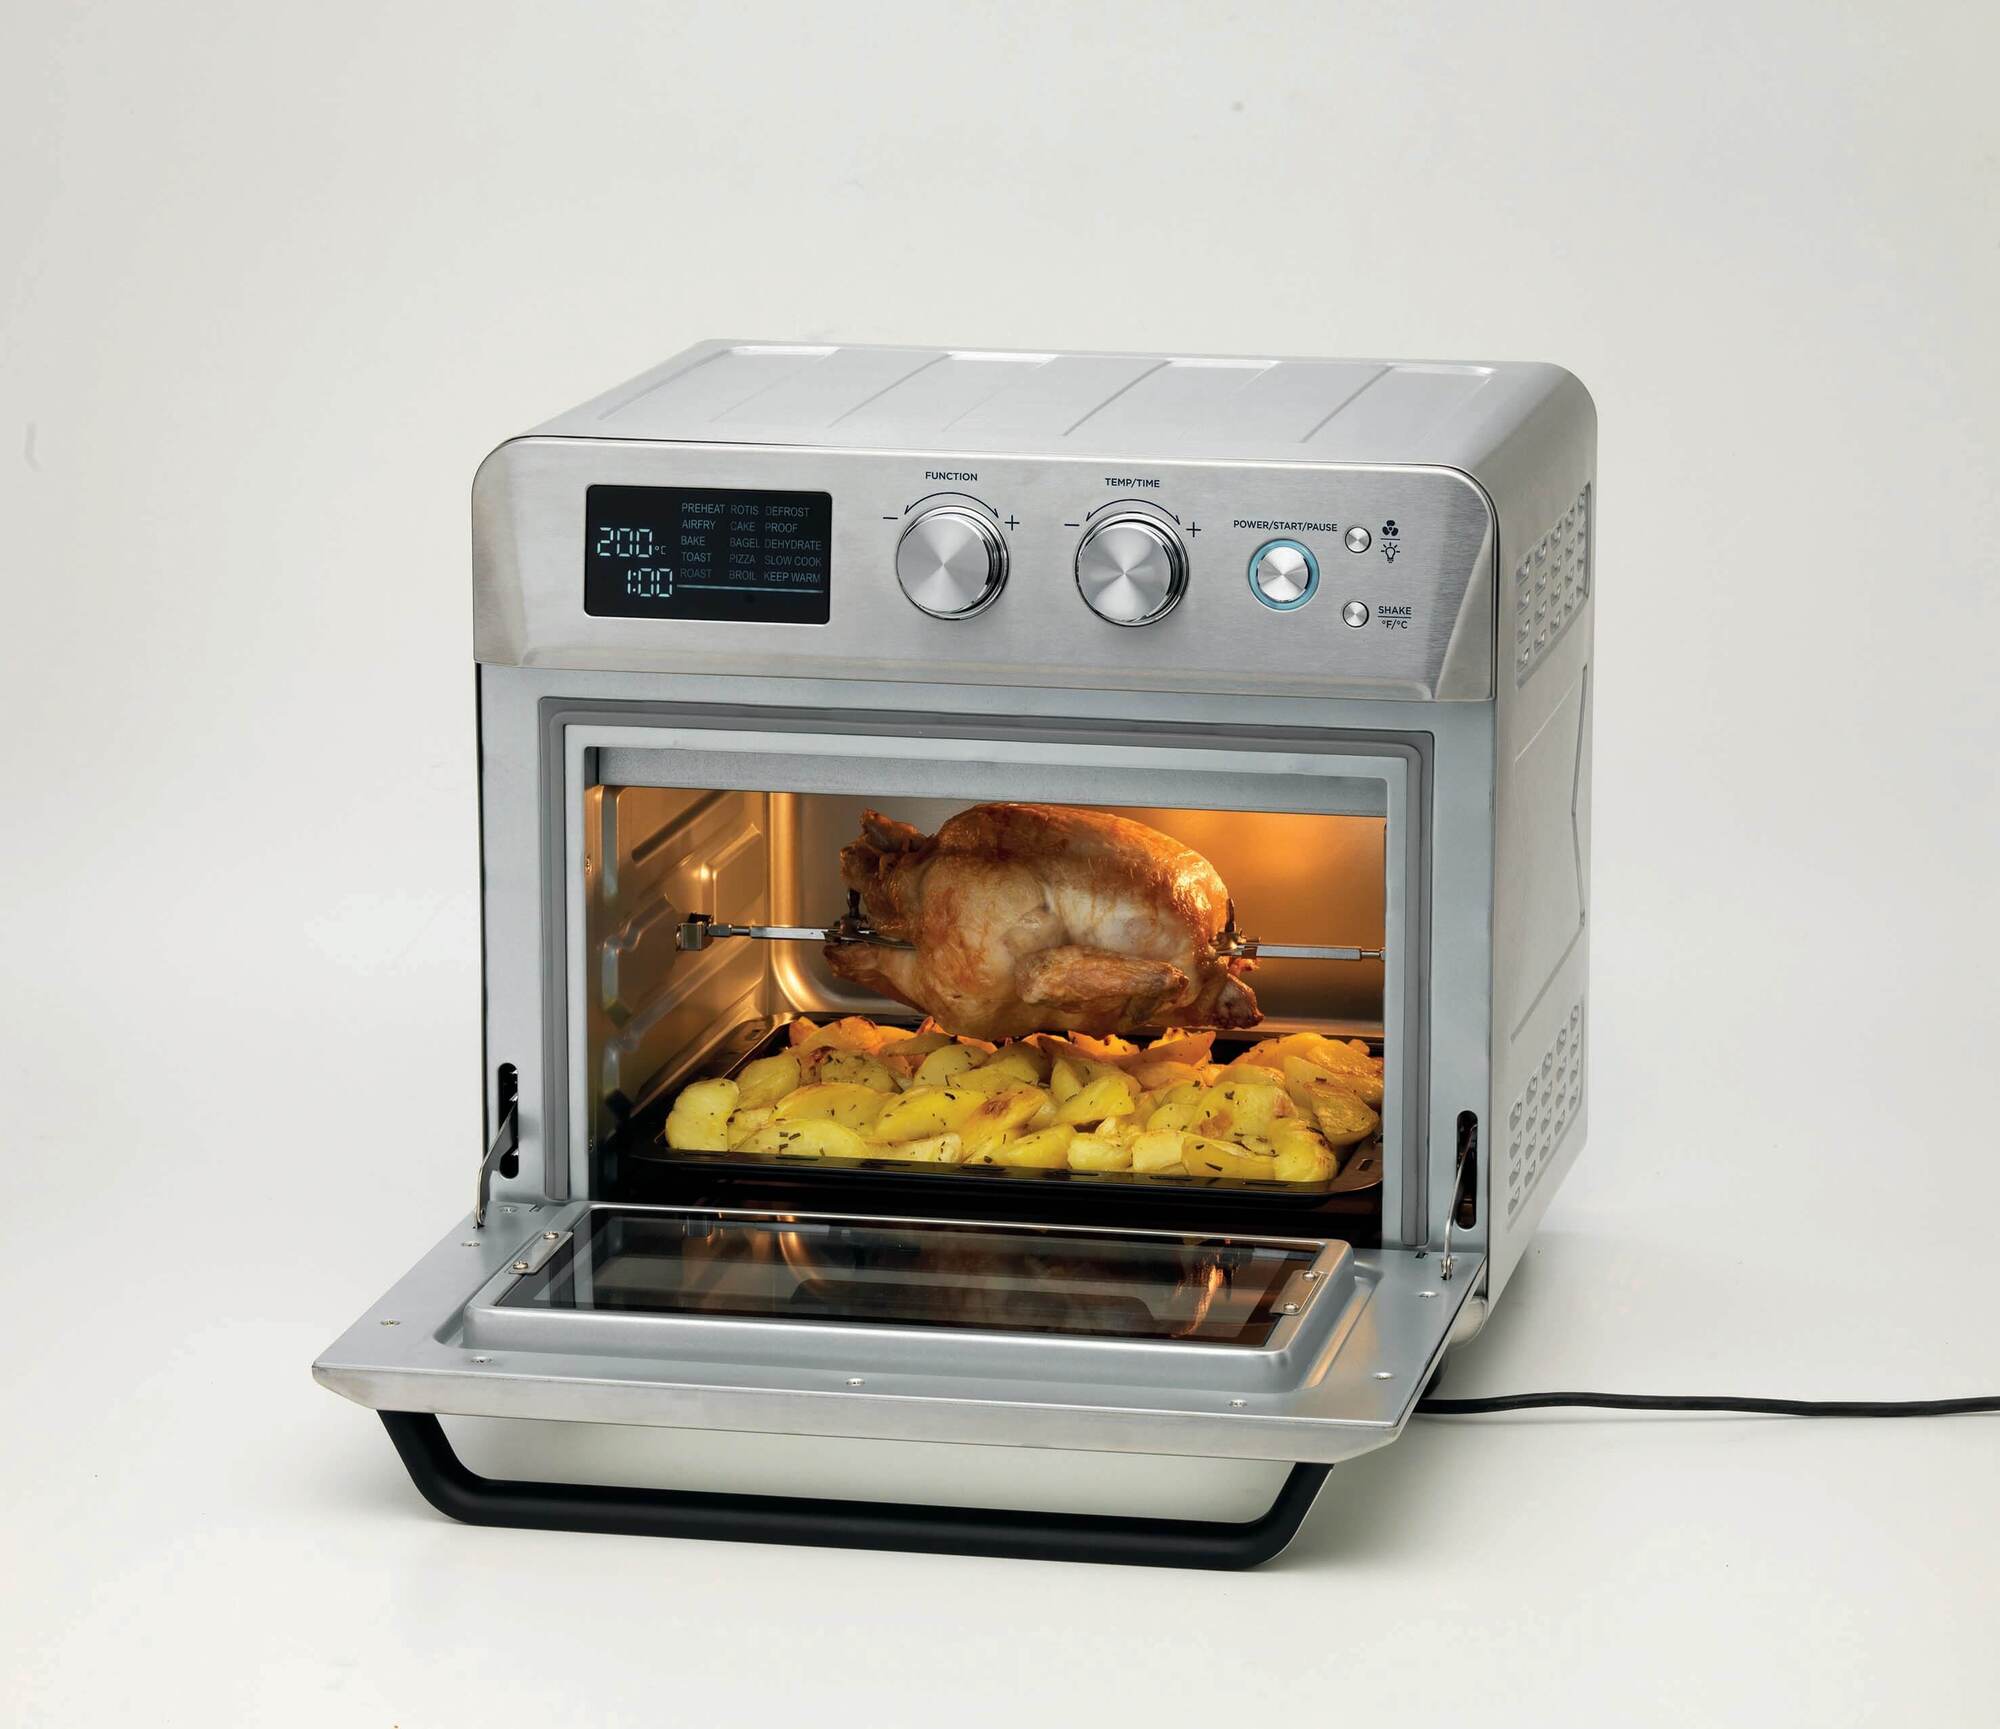 Apriamo insieme la mia friggitrice ad aria Ariete Airy fryer oven#simobí  #friggitriceadaria 